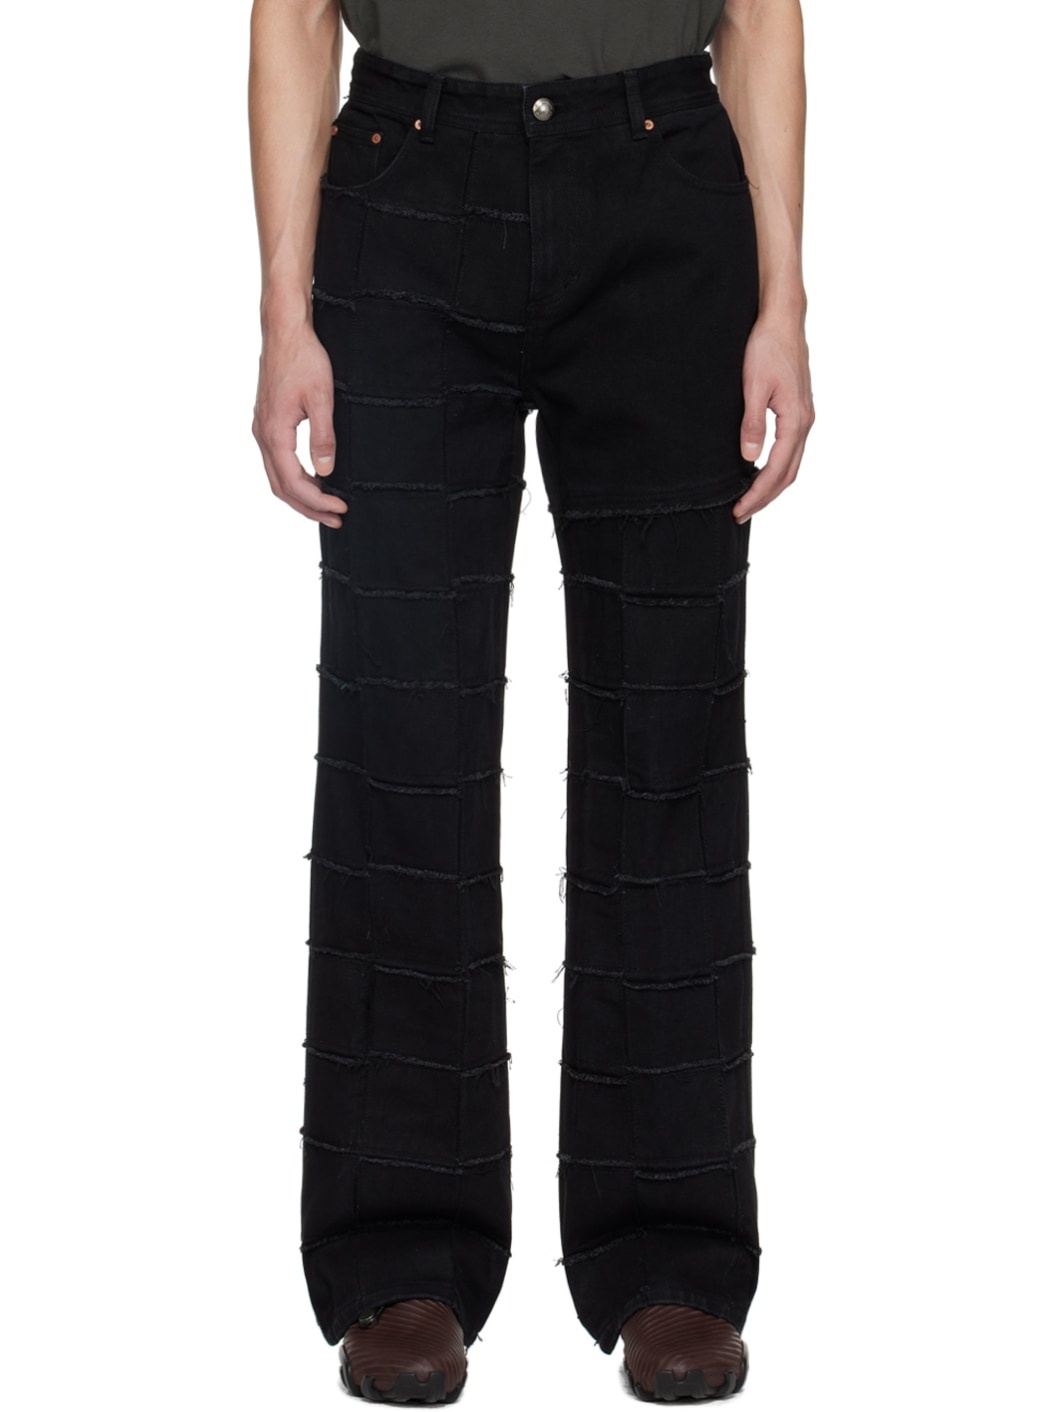 Black New Patchwork Jeans - 1